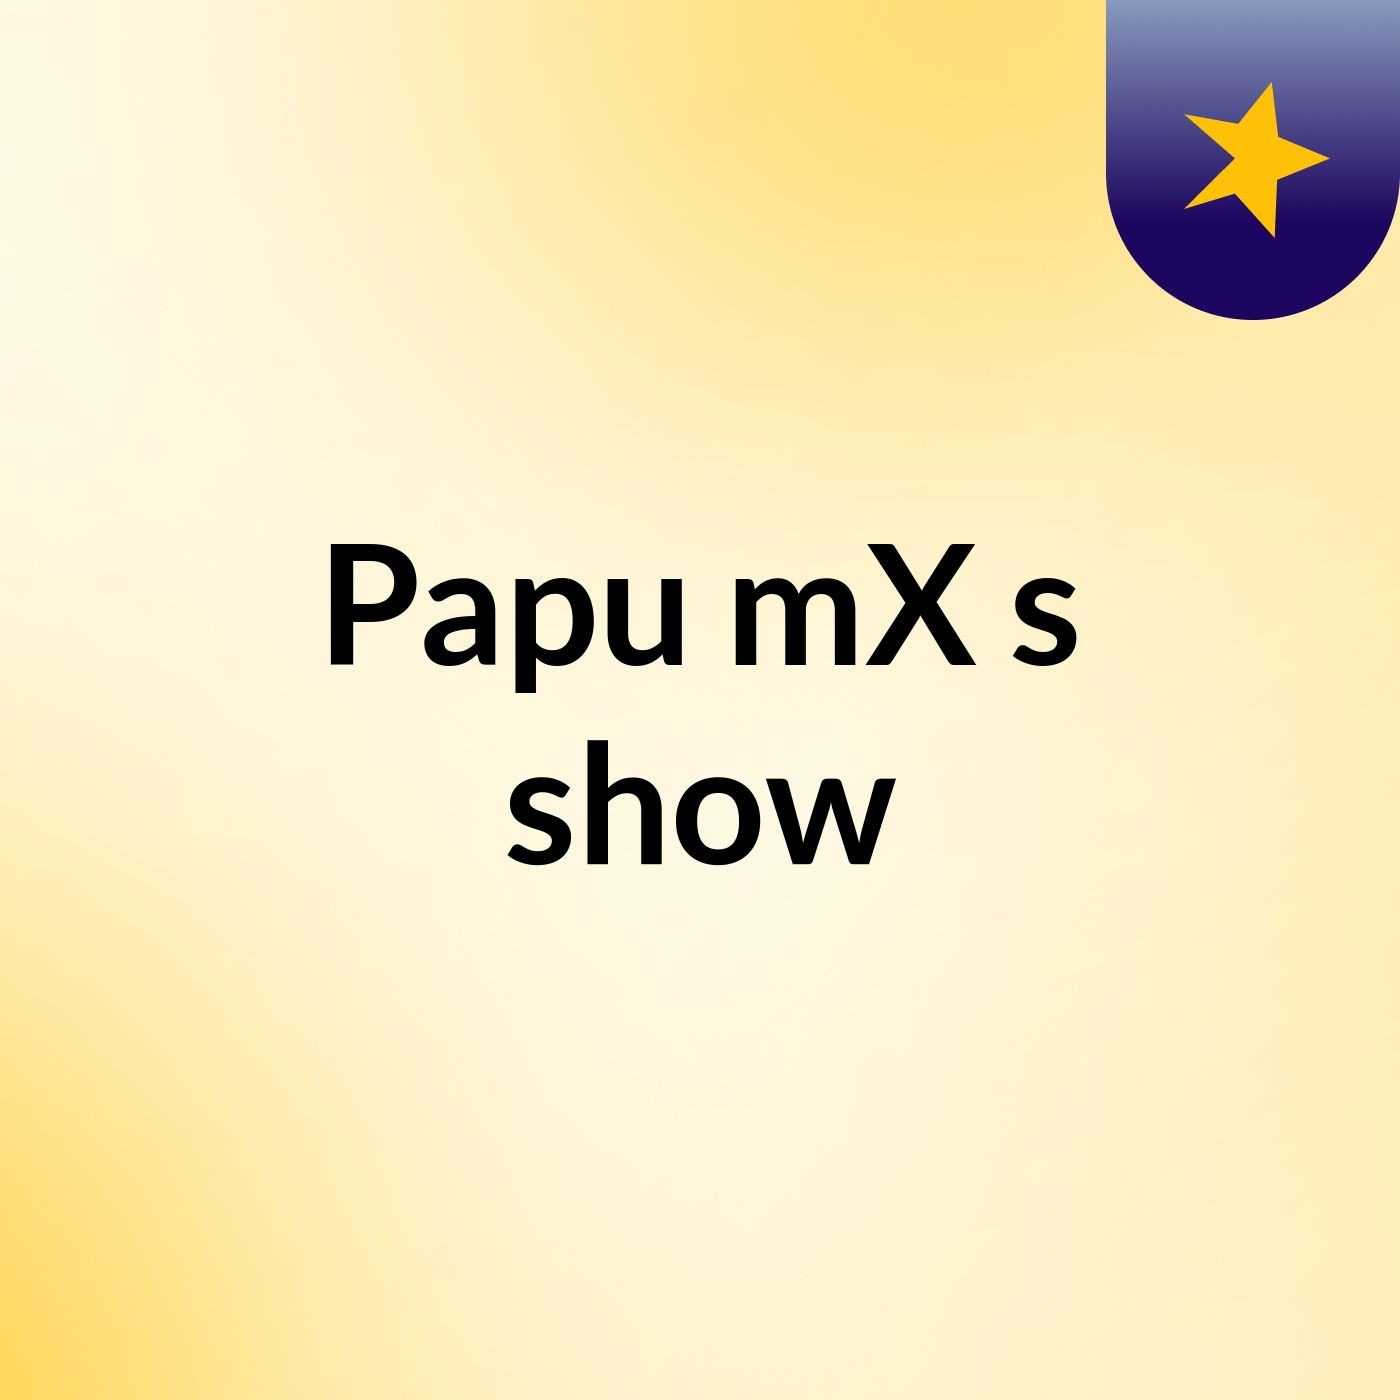 Papu mX's show